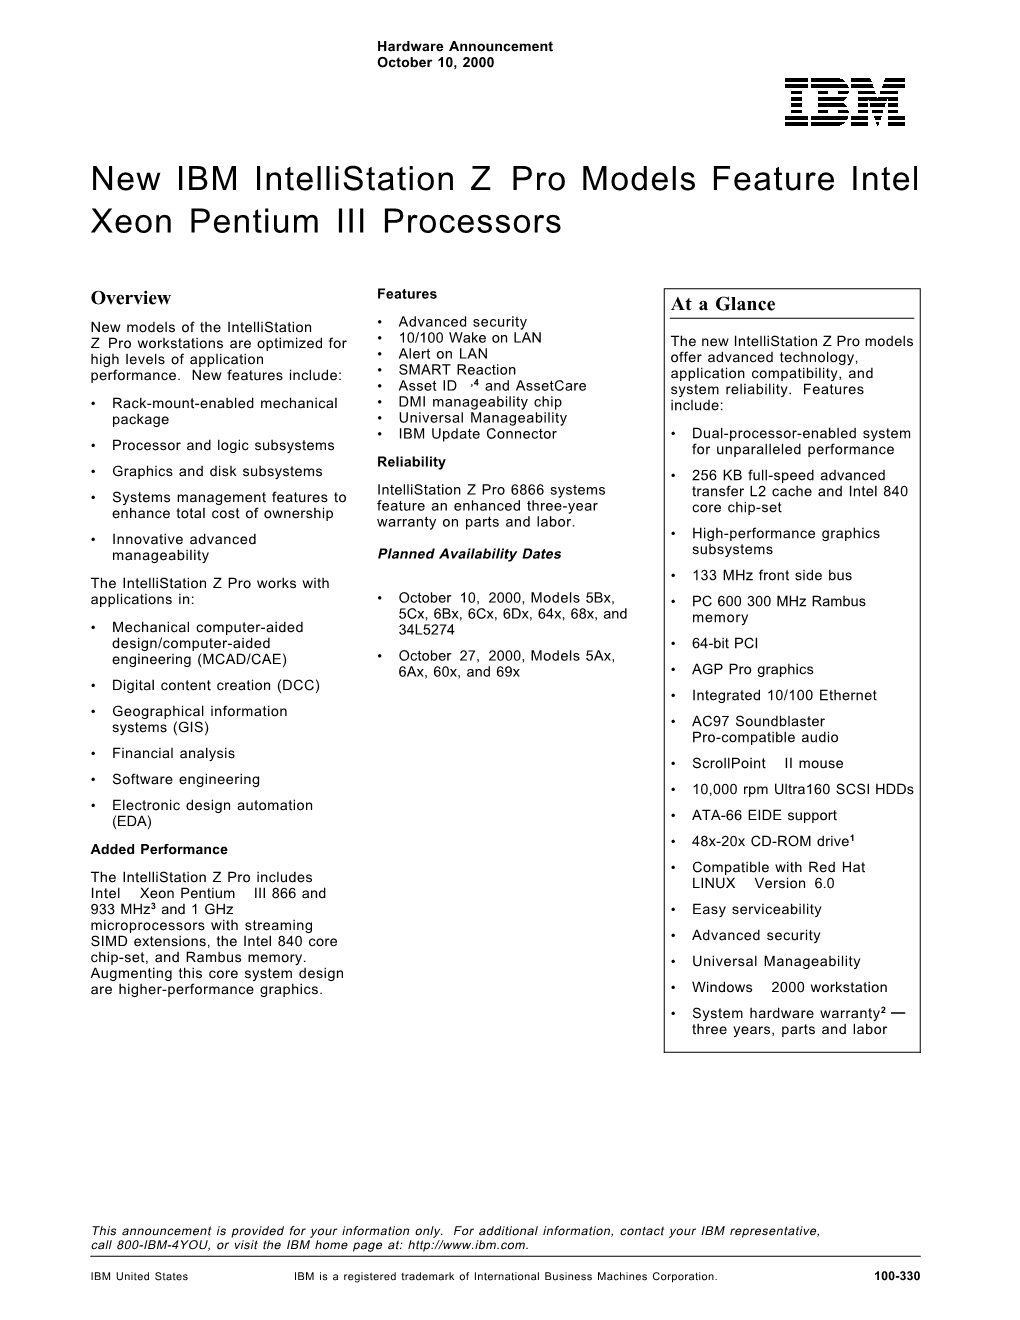 New IBM Intellistation Z Pro Models Feature Intel Xeon Pentium III Processors